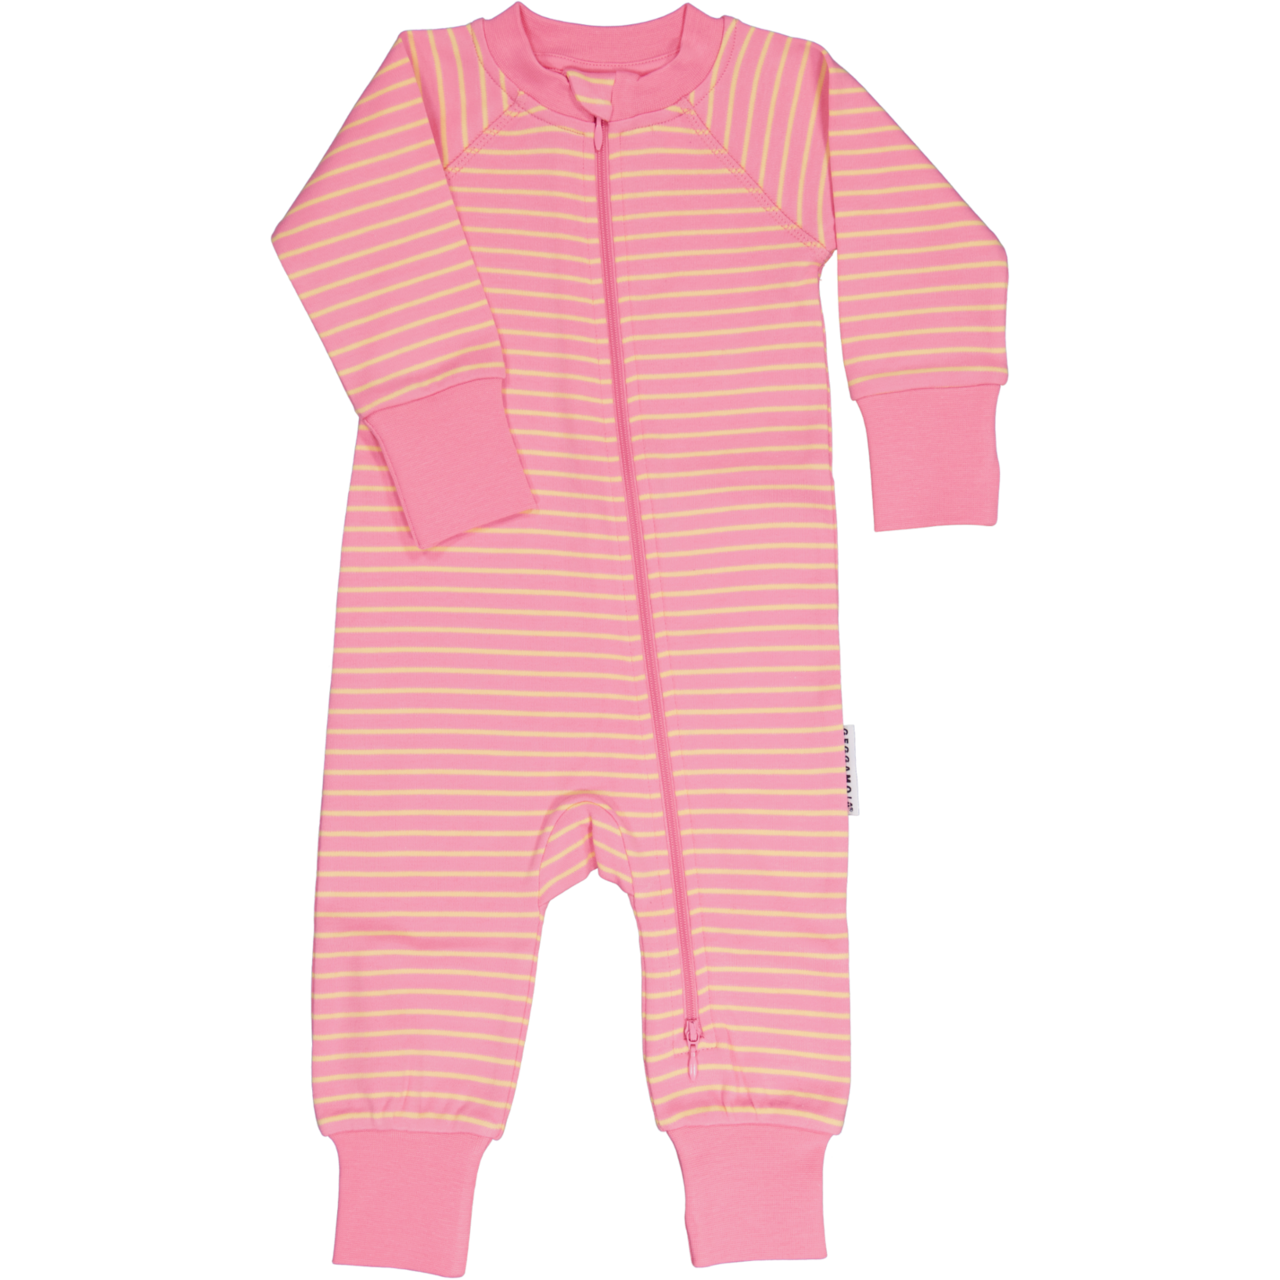 Pyjamas heldräktRosa/gul  86/92